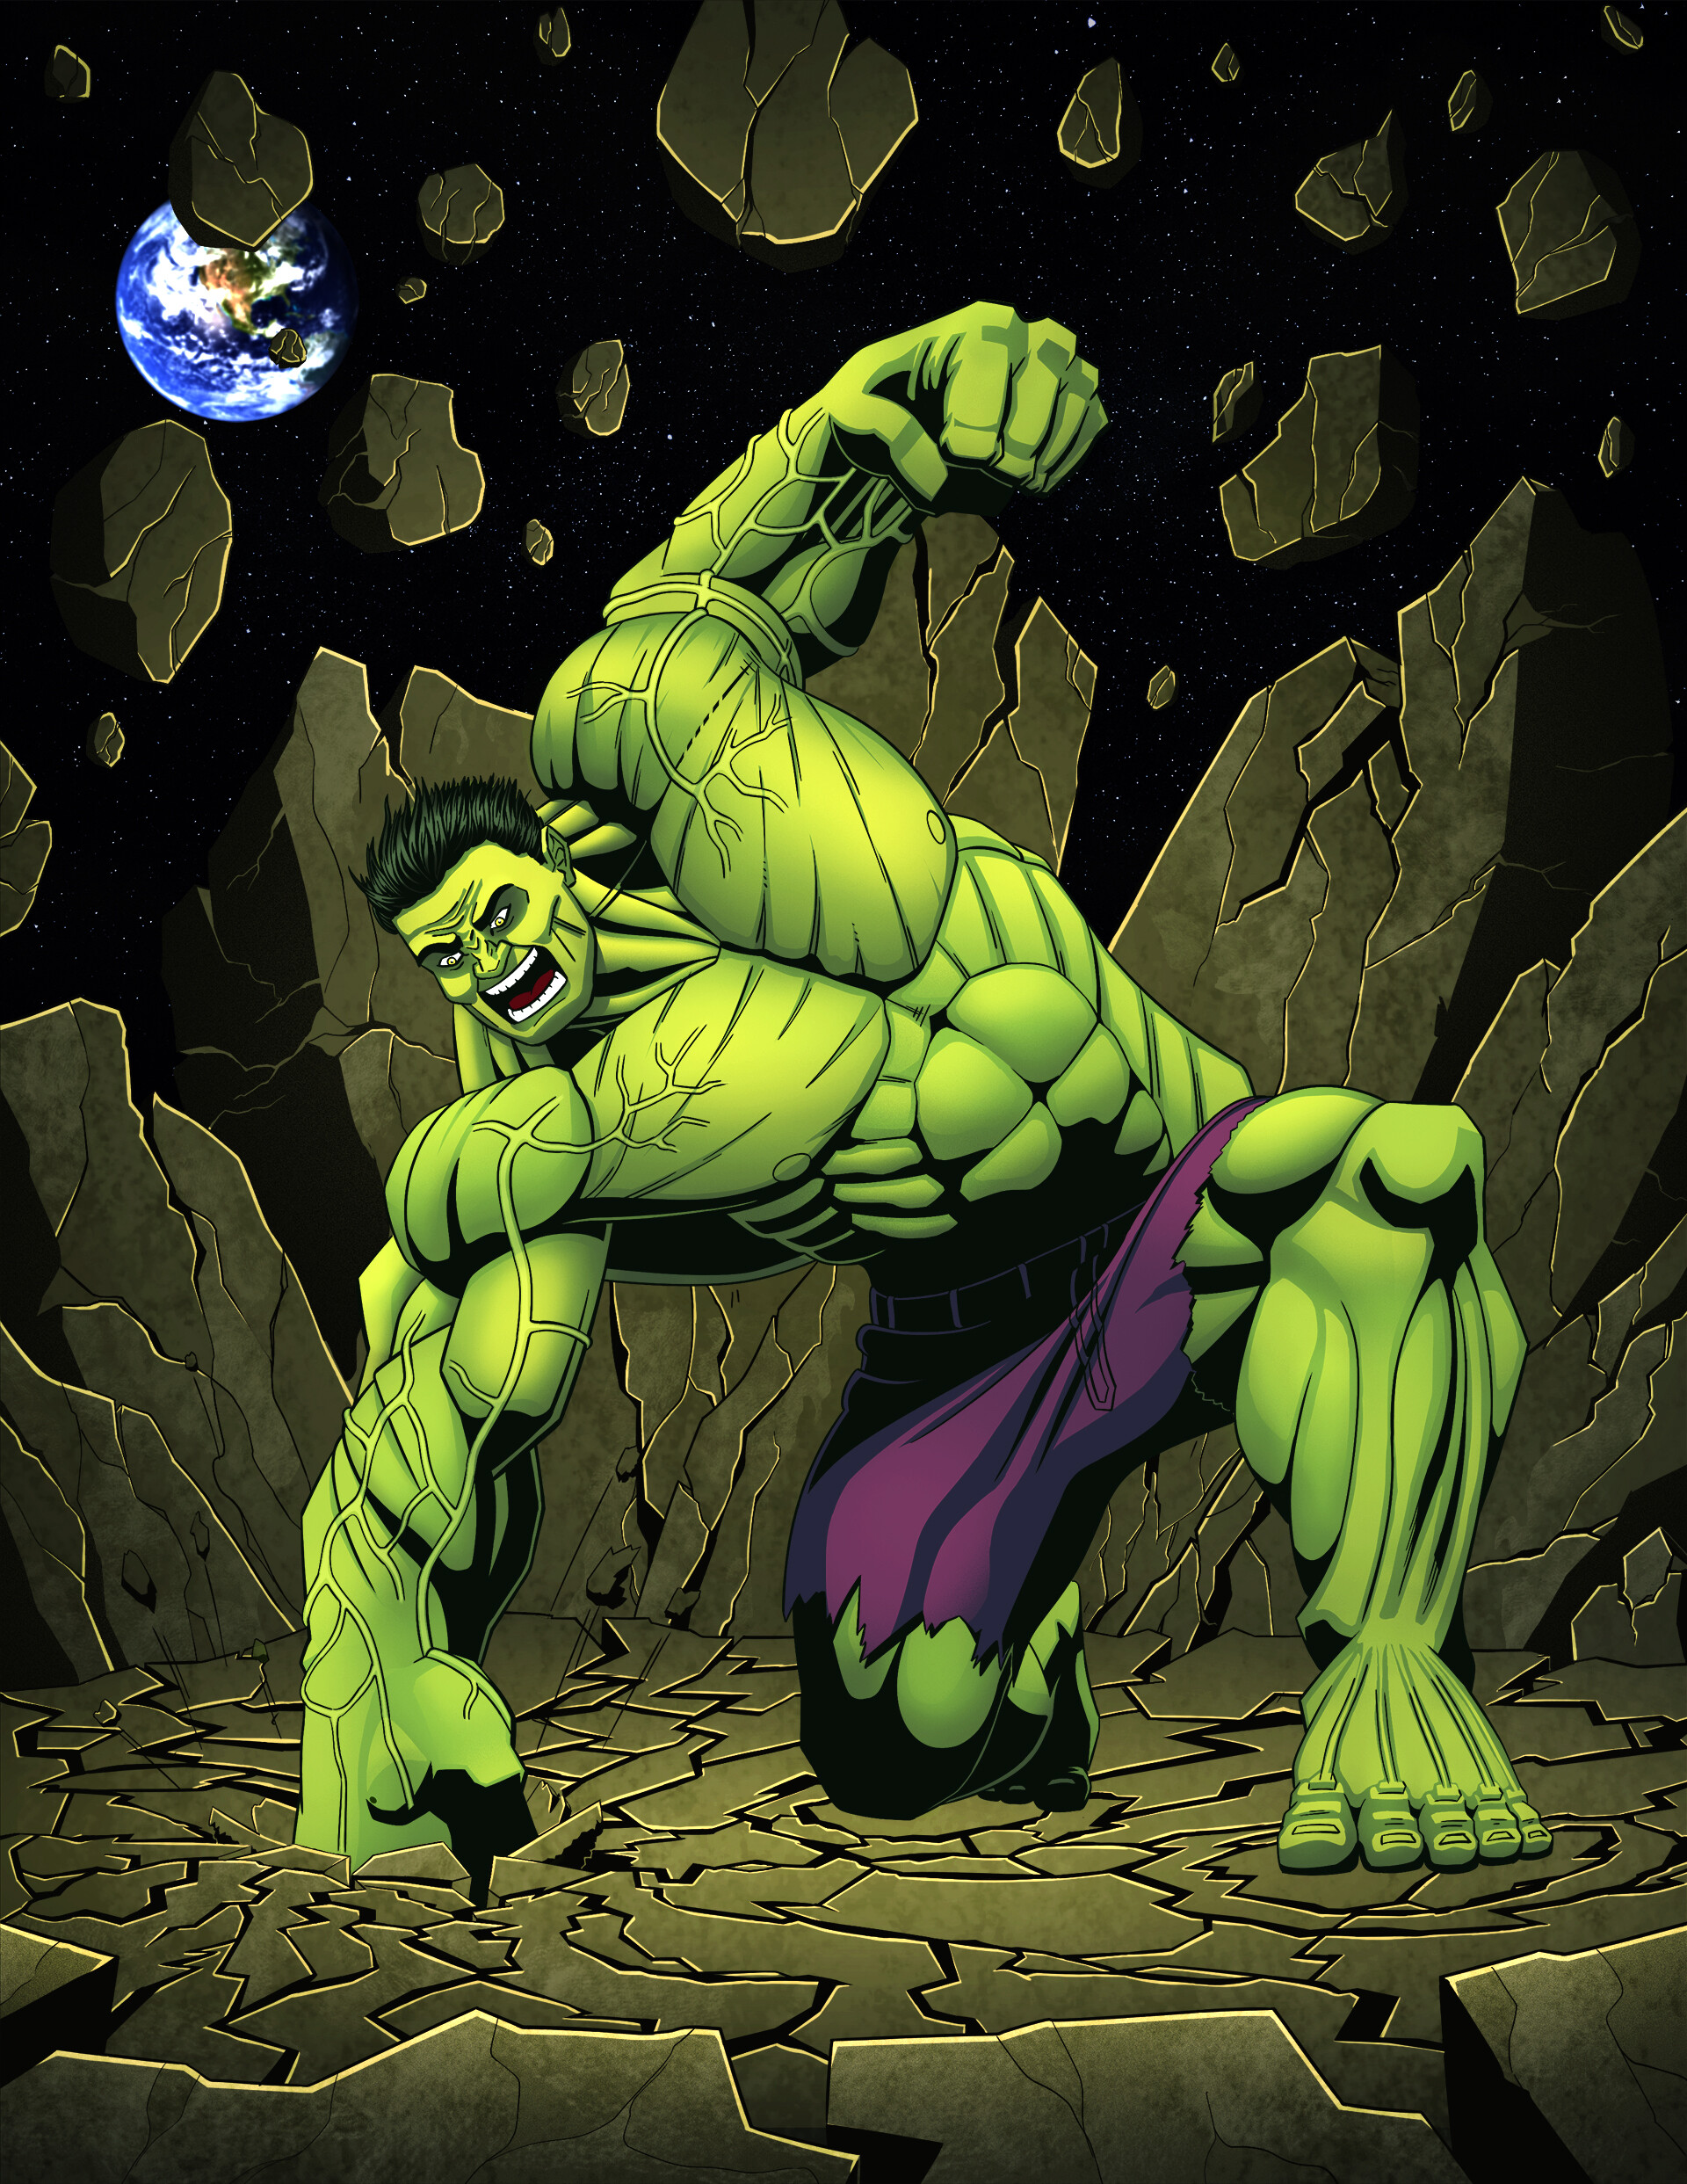 ArtStation - Hulk Smash!